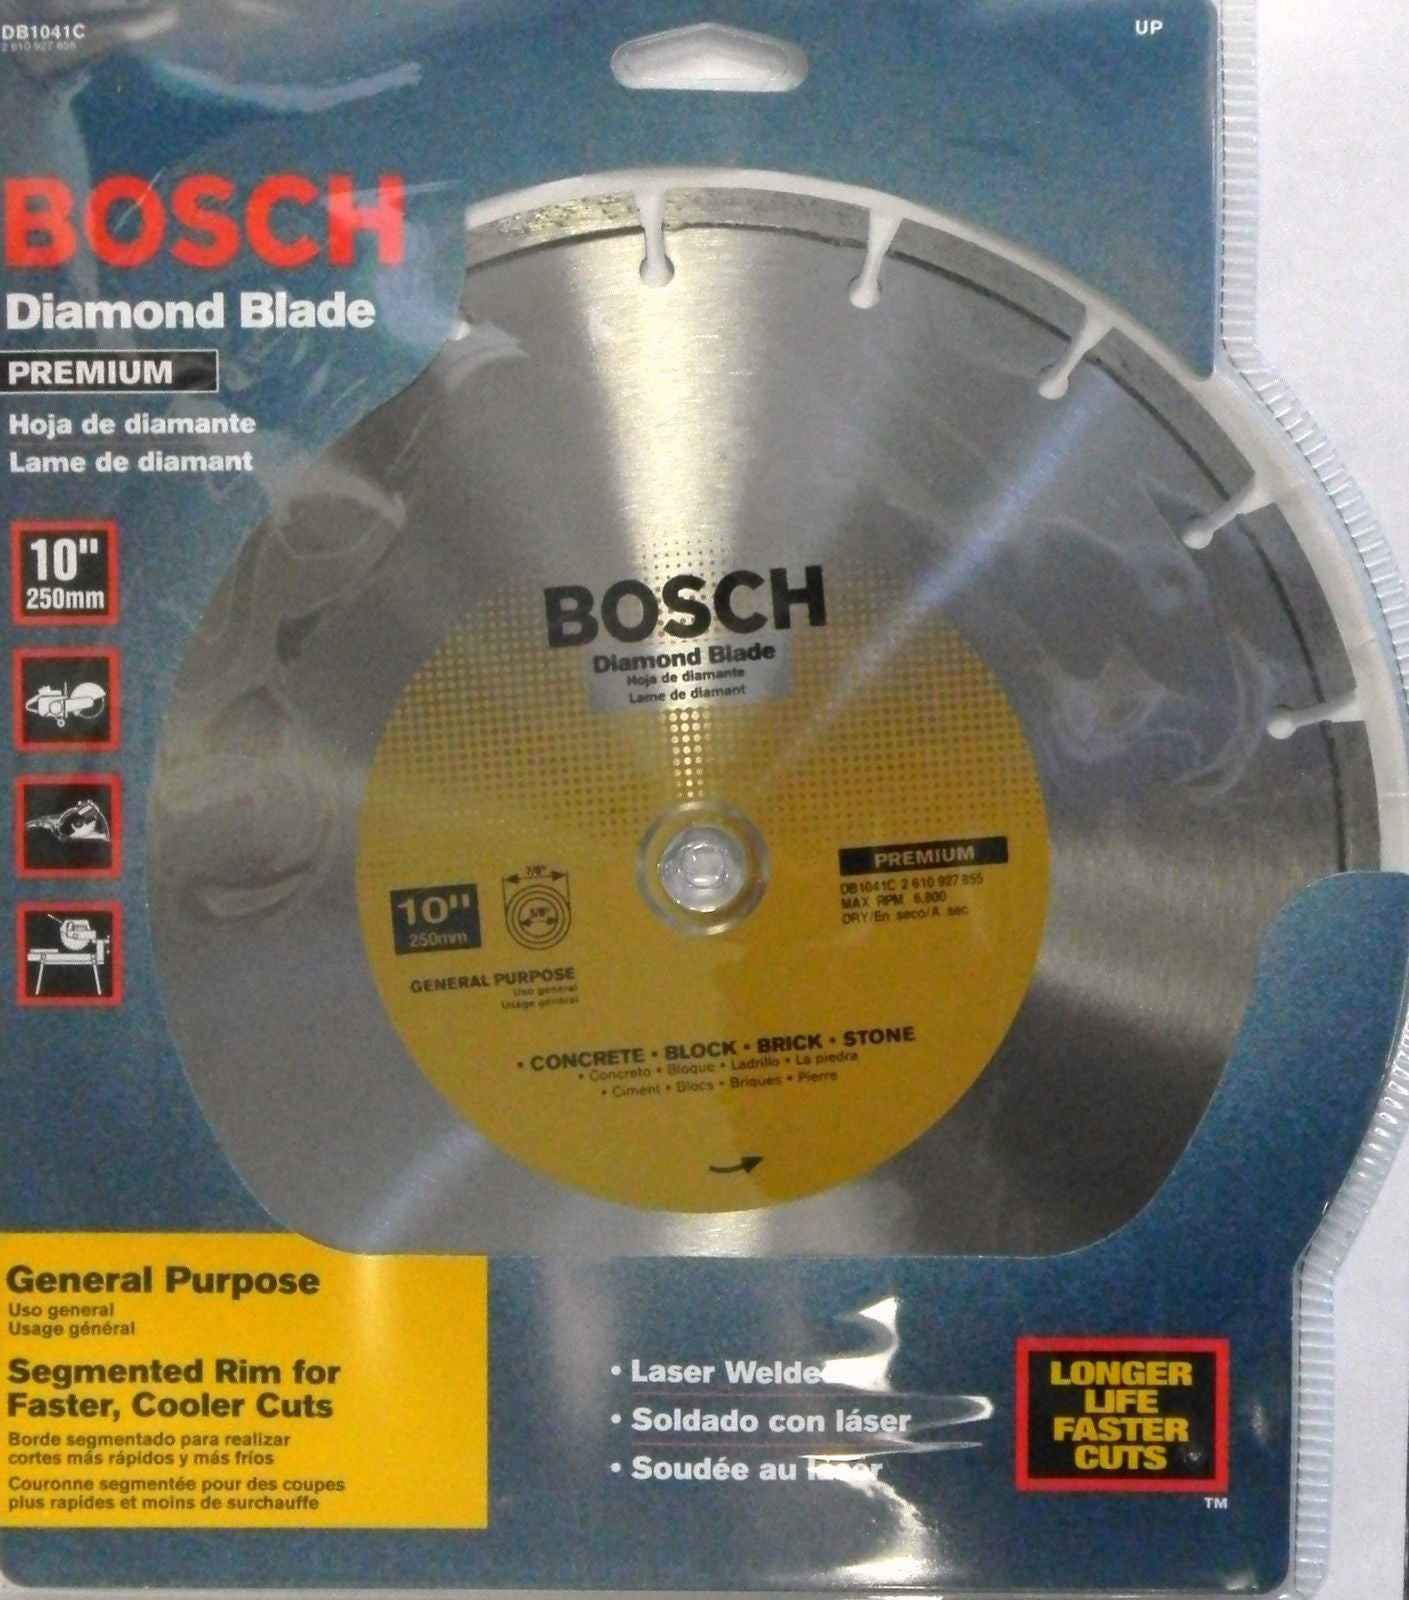 Bosch DB1041C 10" Premium Plus Diamond Saw Blade 7/8" & 5/8" Arbor